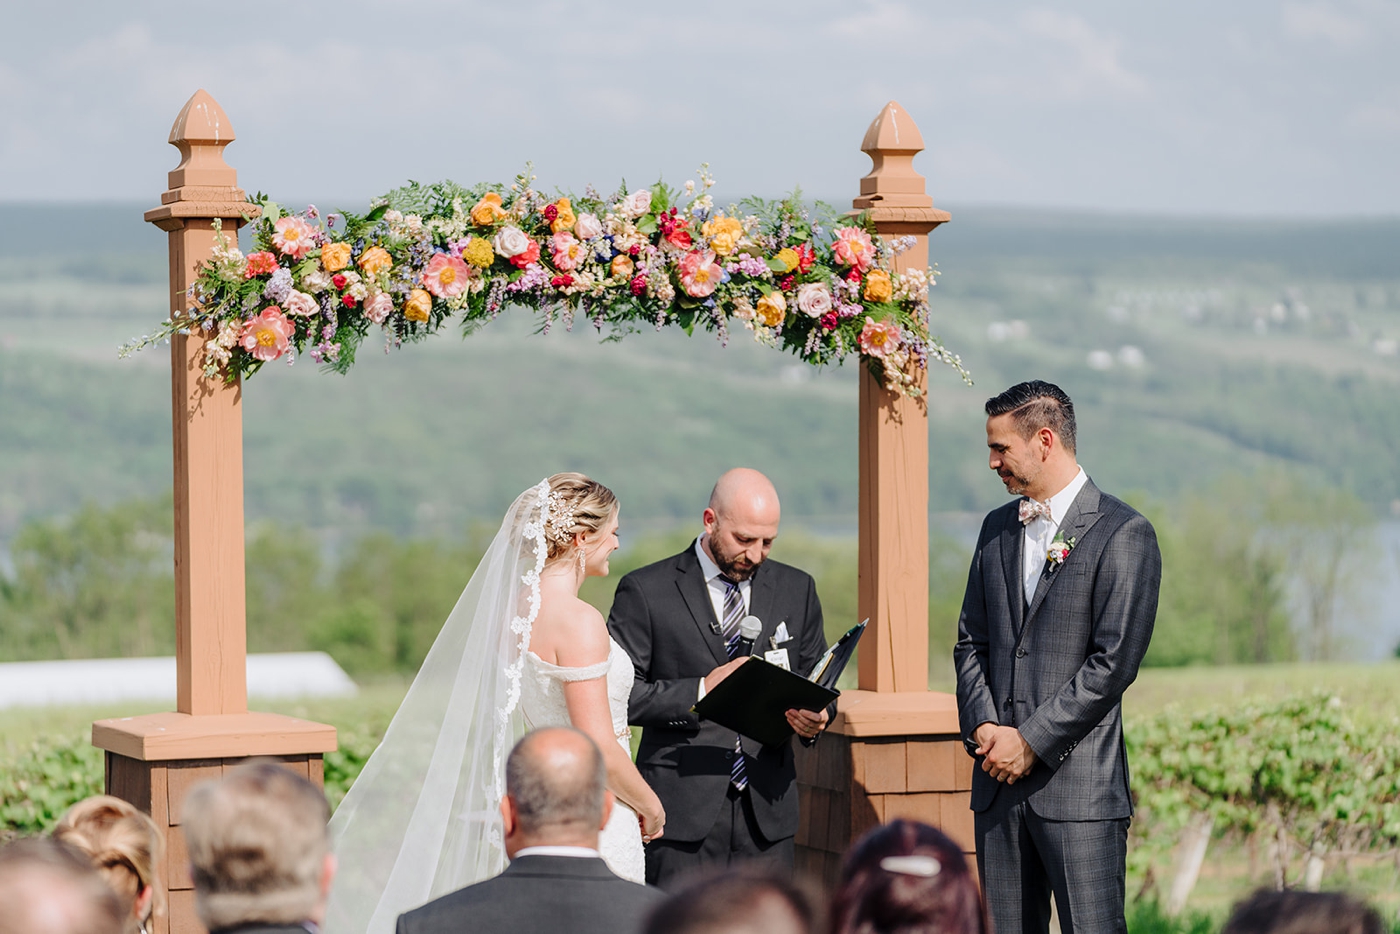 Outdoor wedding ceremony at Glenora Winery